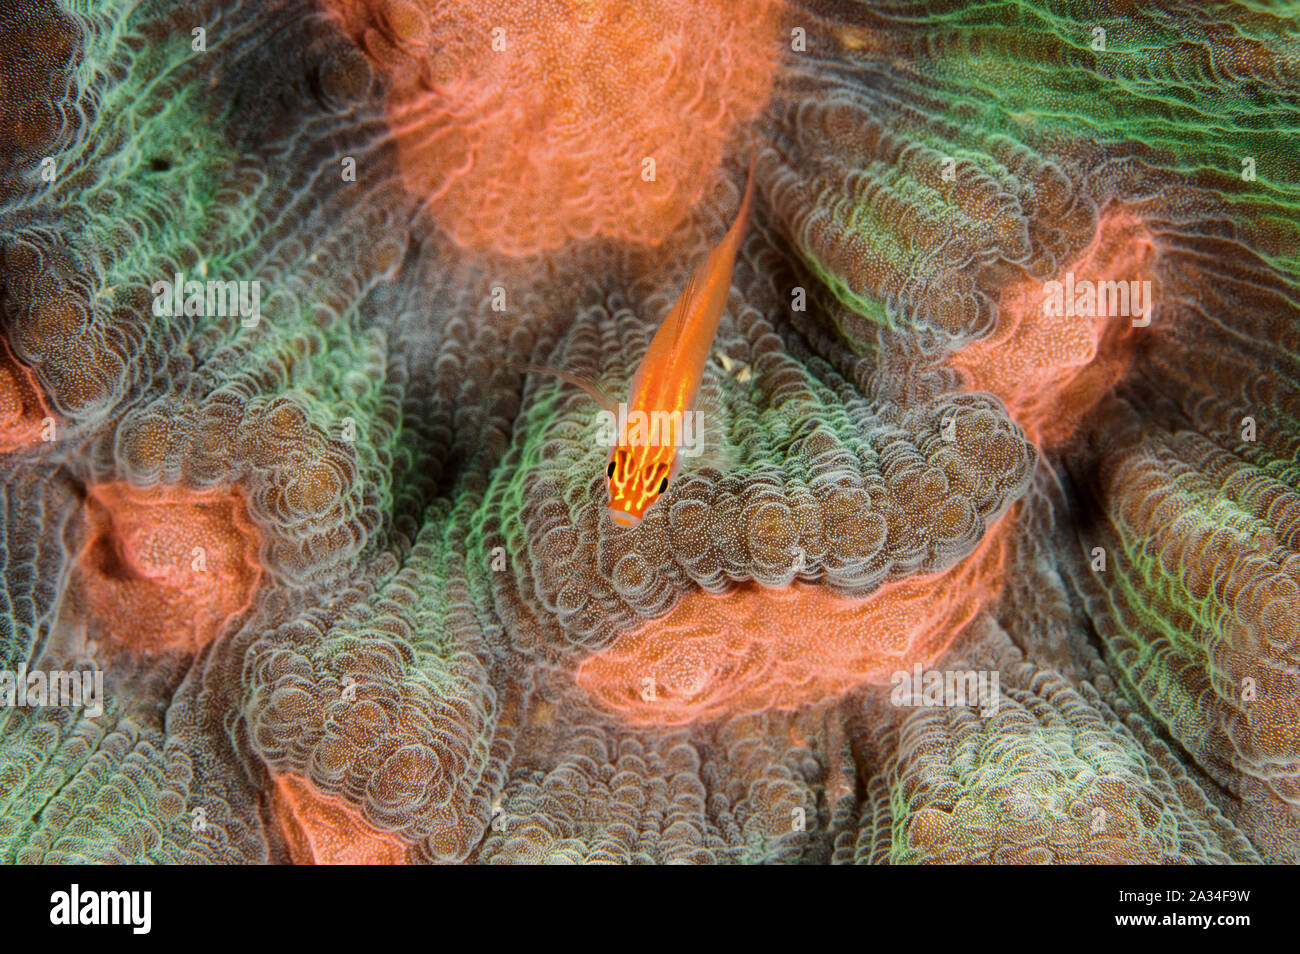 Neon dwarfgoby, Eviota atriventris, on a hard coral, Mycedium elephantotus, Sulawesi Indonesia. Stock Photo